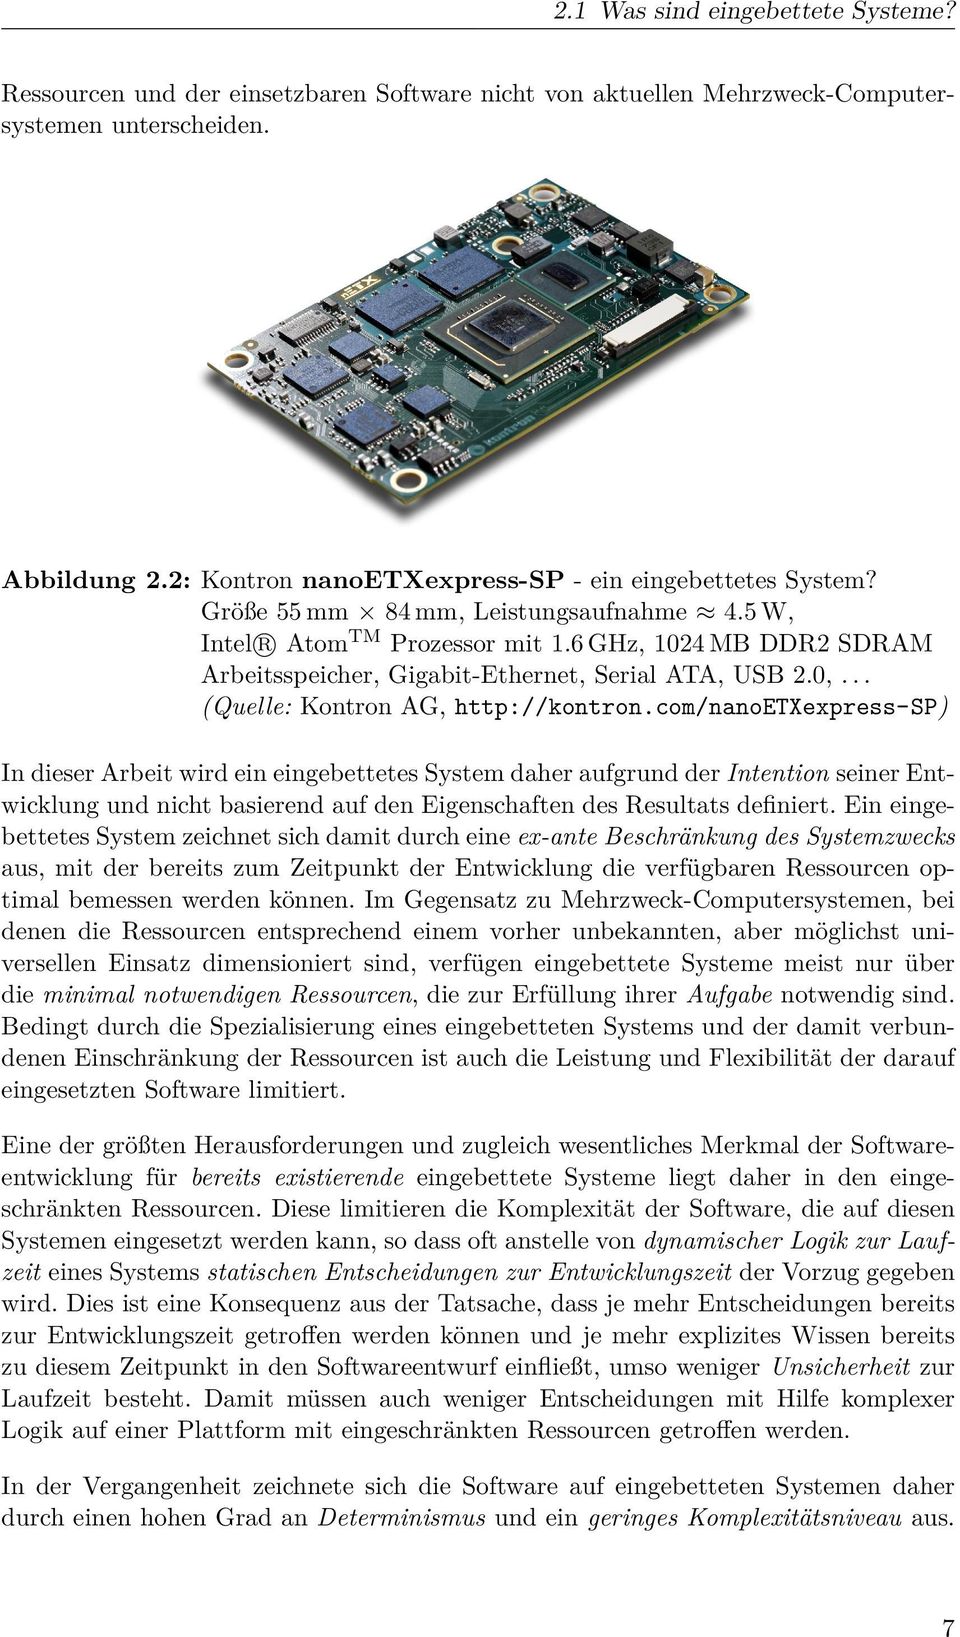 6 GHz, 1024 MB DDR2 SDRAM Arbeitsspeicher, Gigabit-Ethernet, Serial ATA, USB 2.0,... (Quelle: Kontron AG, http://kontron.